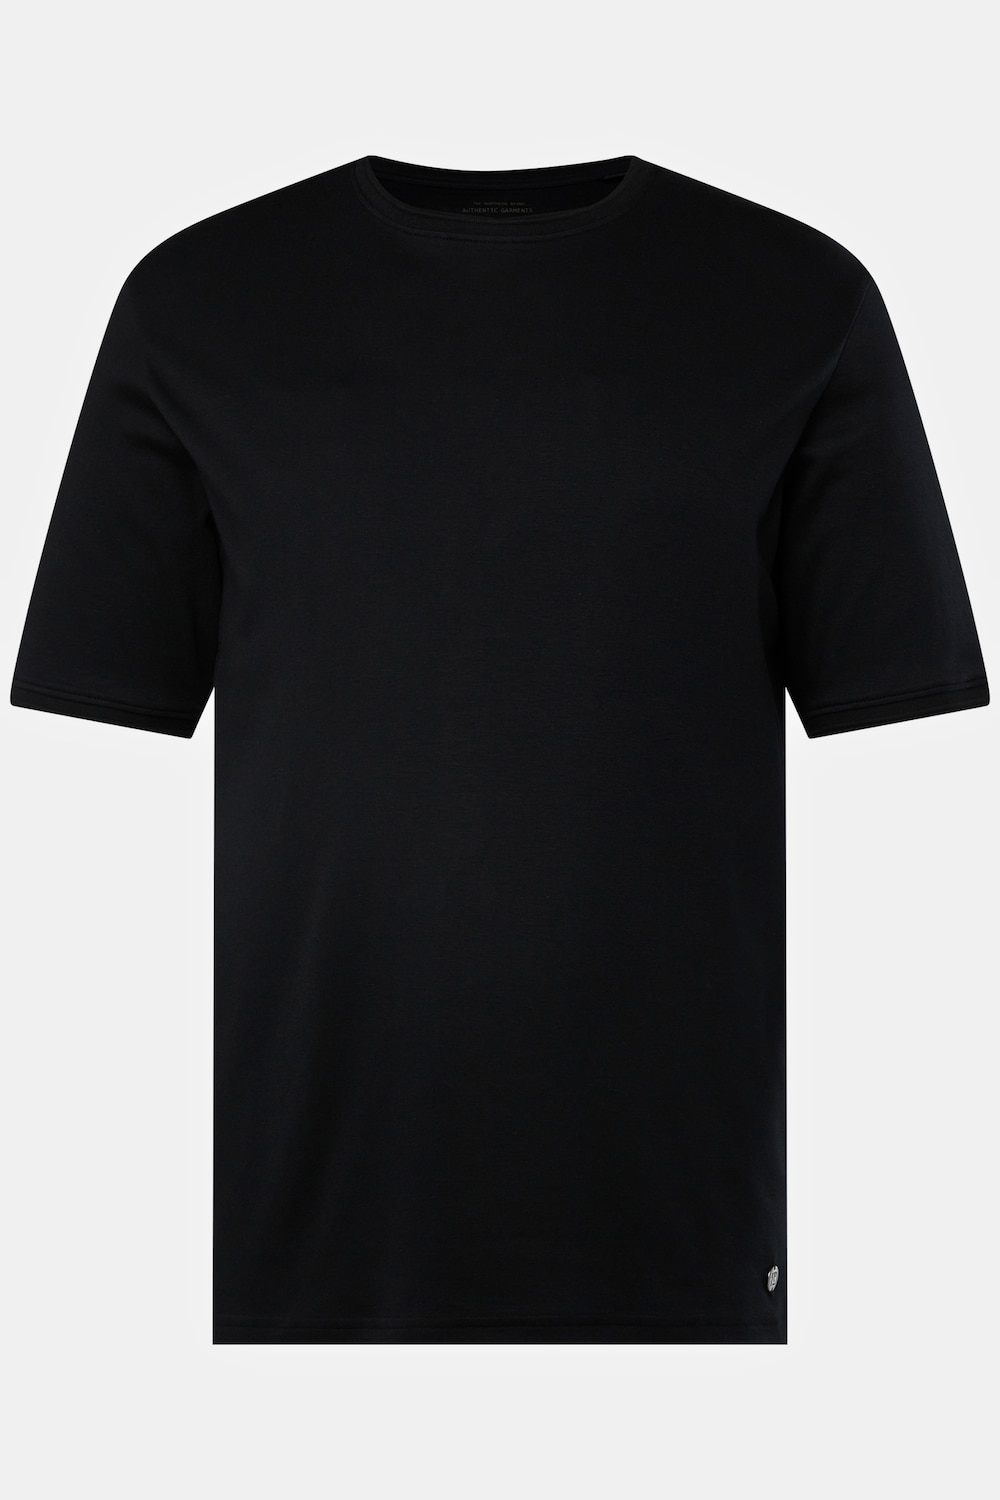 Grote Maten T-shirt, Heren, zwart, Maat: 4XL, Katoen/Viscose, JP1880